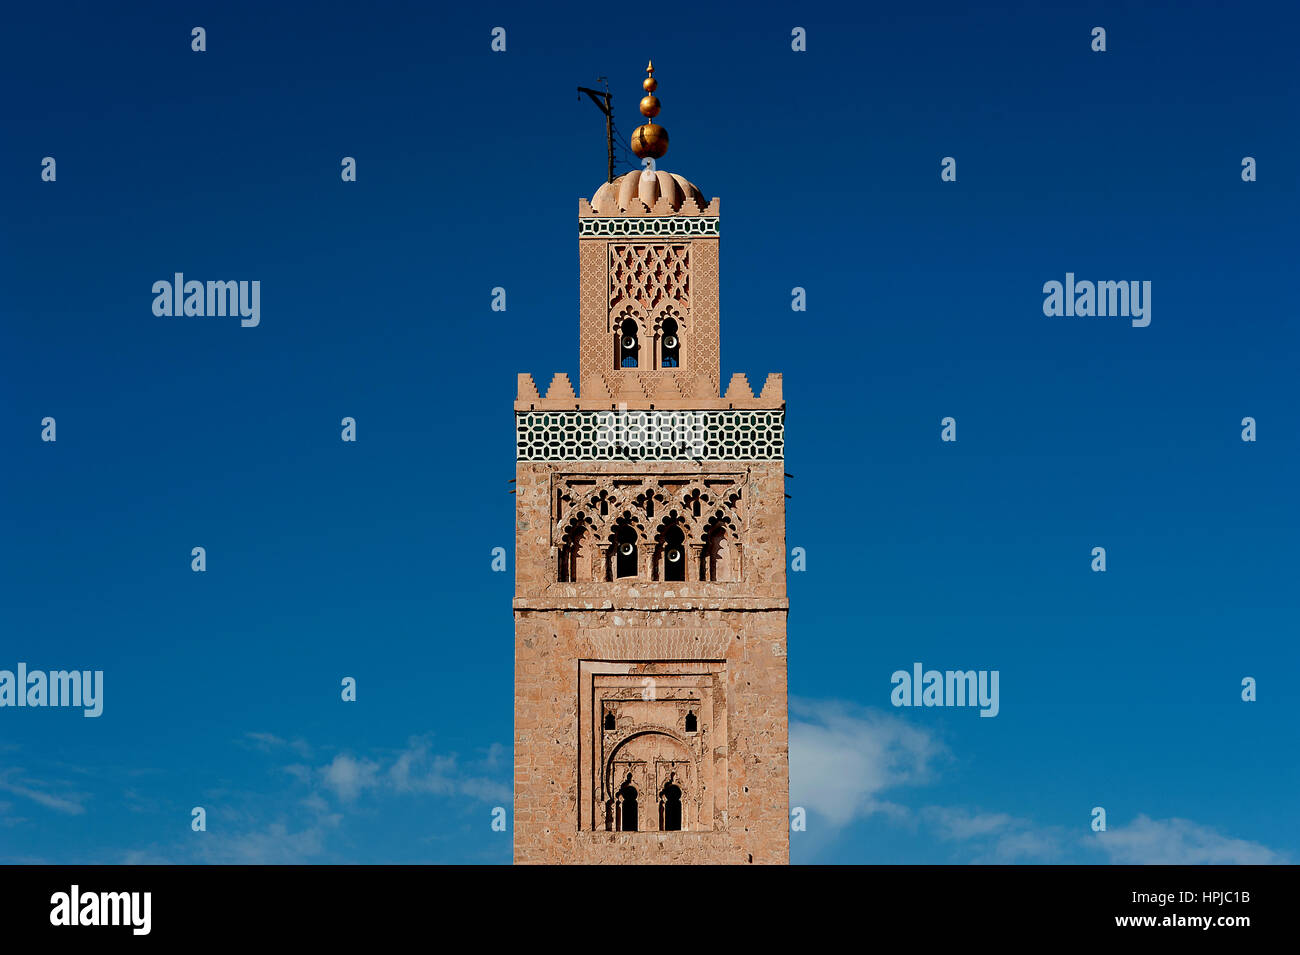 Koutoubia Minaret, Marrakesh, Morocco 2016. The Koutoubia minaret, part of Marrakesh's largest mosque, rises 77 metres high above the city's medina. Stock Photo